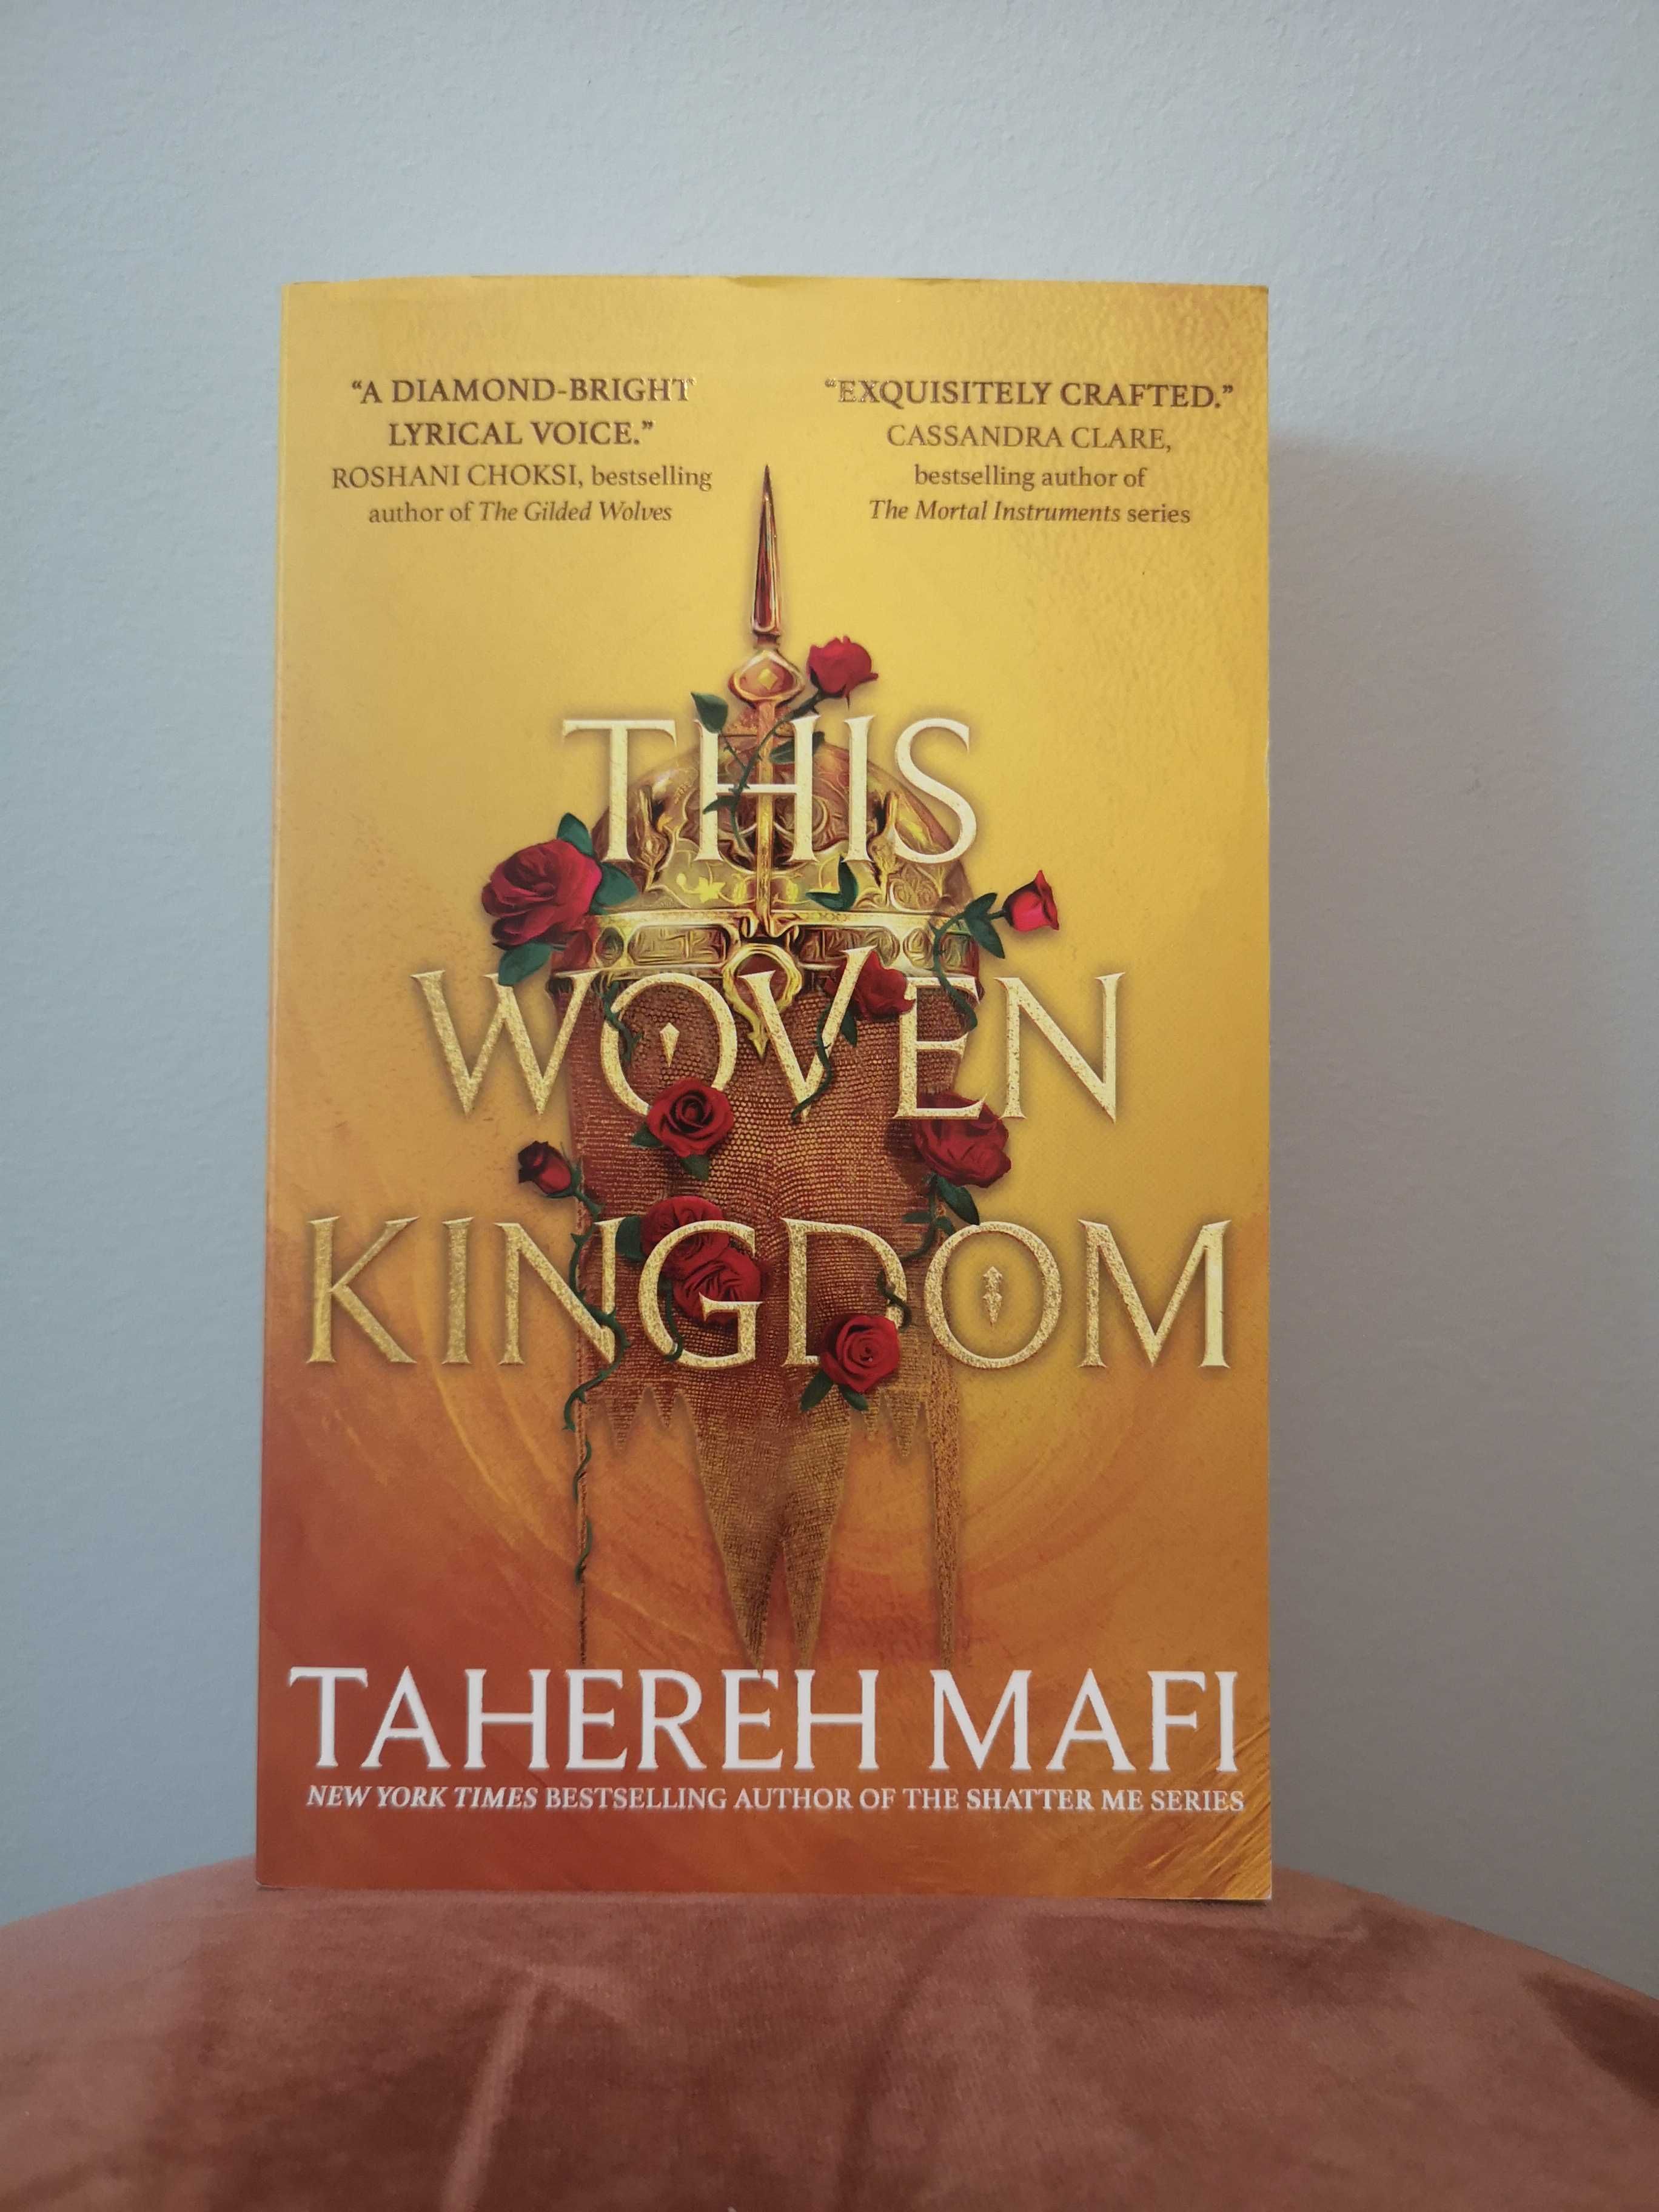 *PROMO* This Woven Kingdom - Tahereh Mafi 8€ PORTES INCLUÍDOS